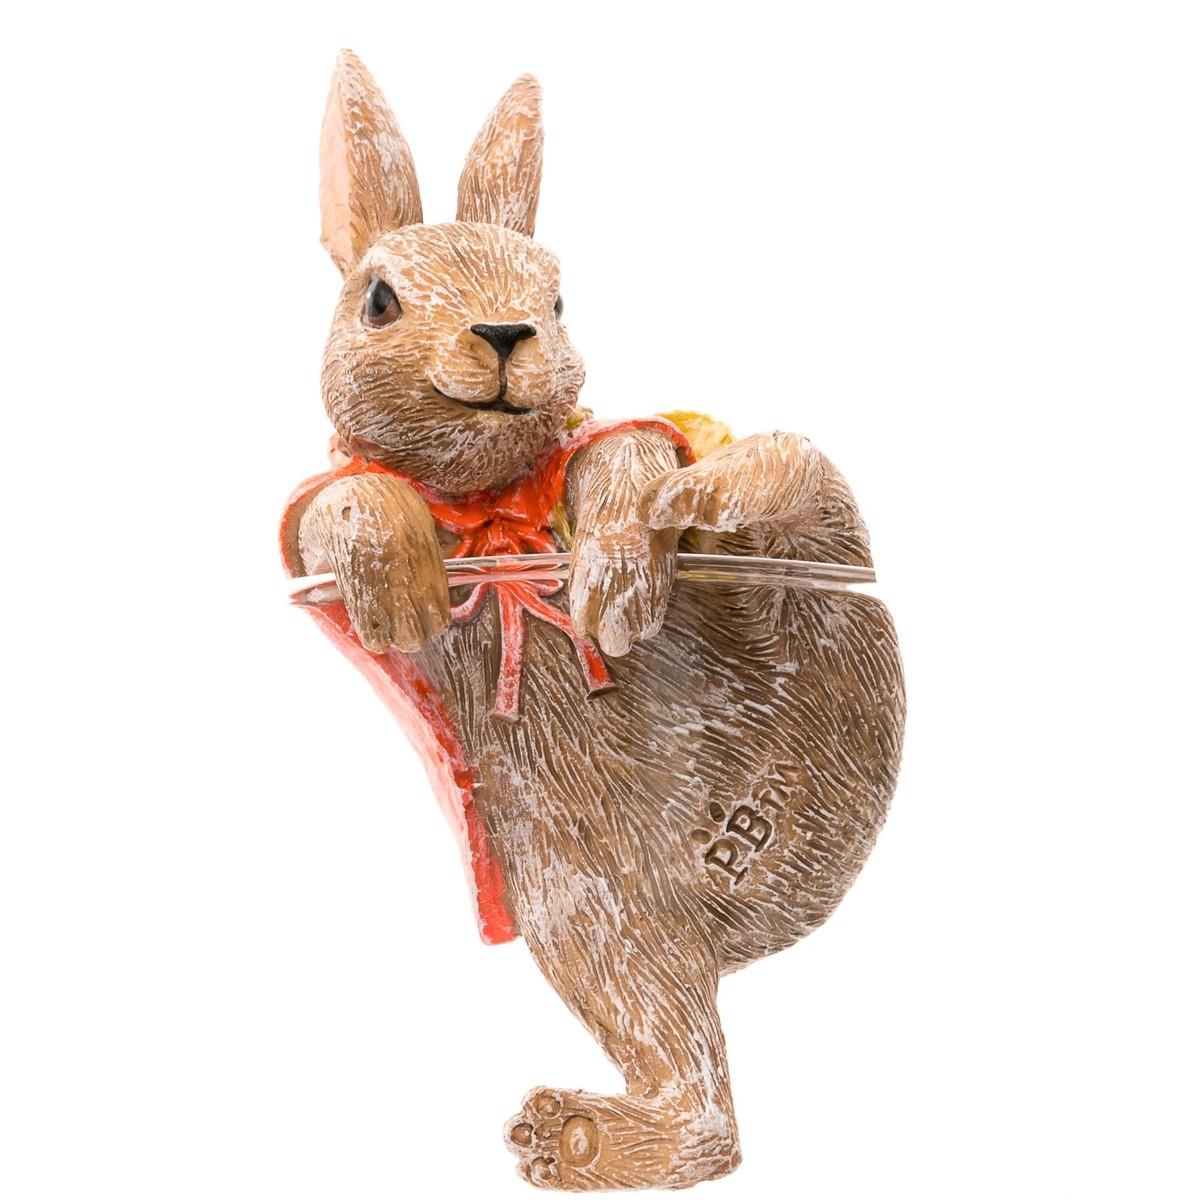  Peter Rabbit Figurine Lapin Flospy  11.5x6x6cm